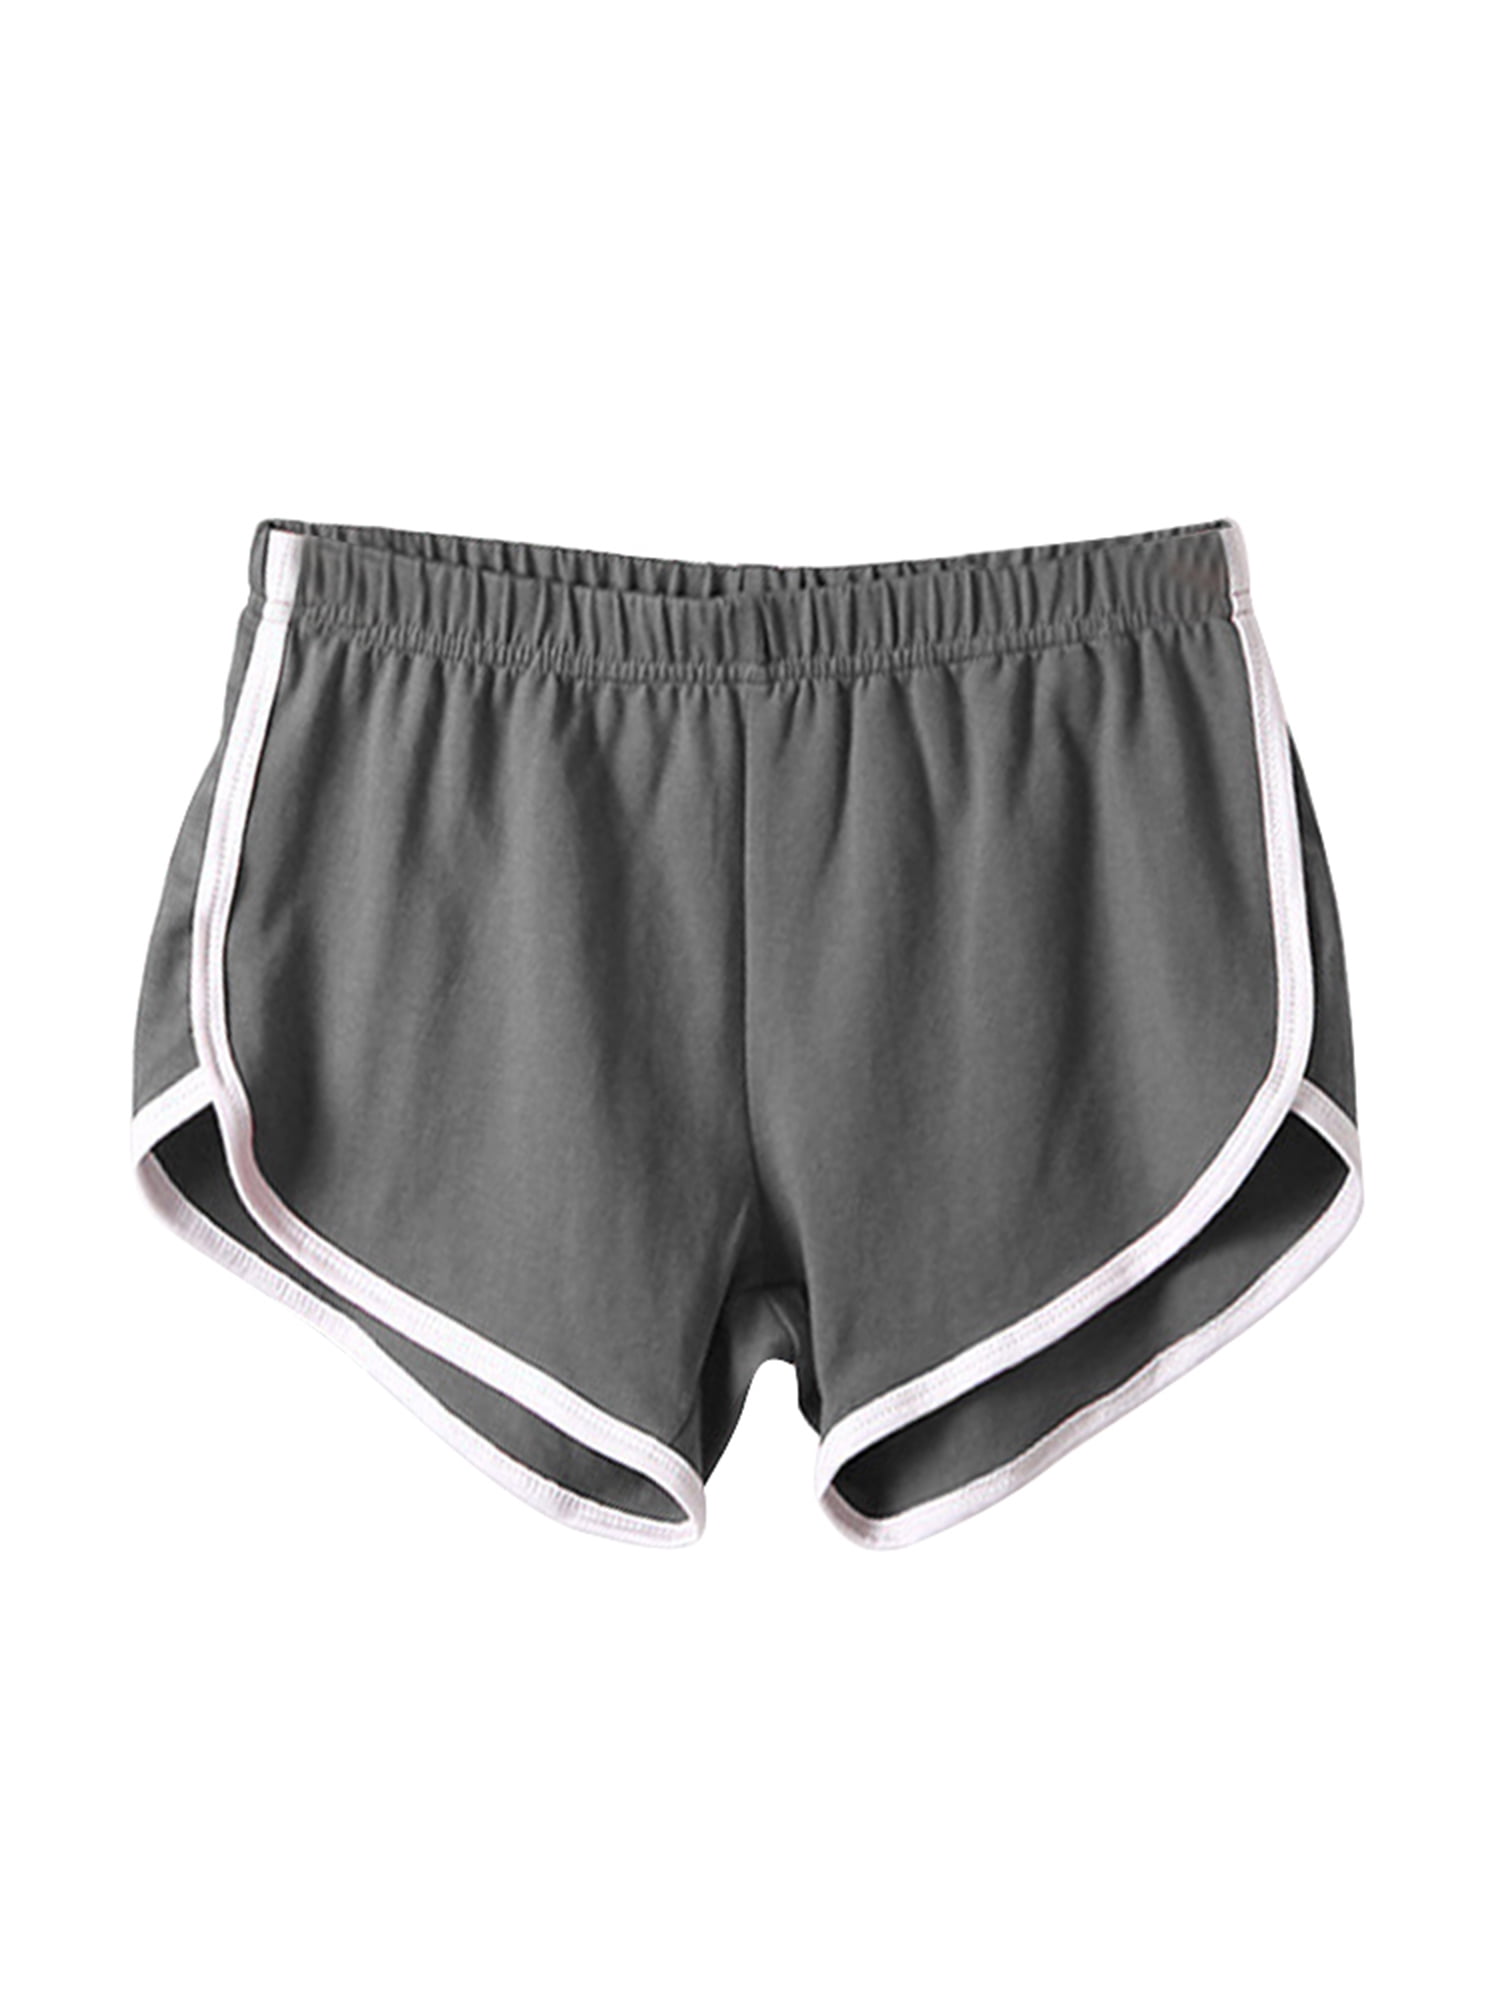 Women's Shorts/Sweatpants